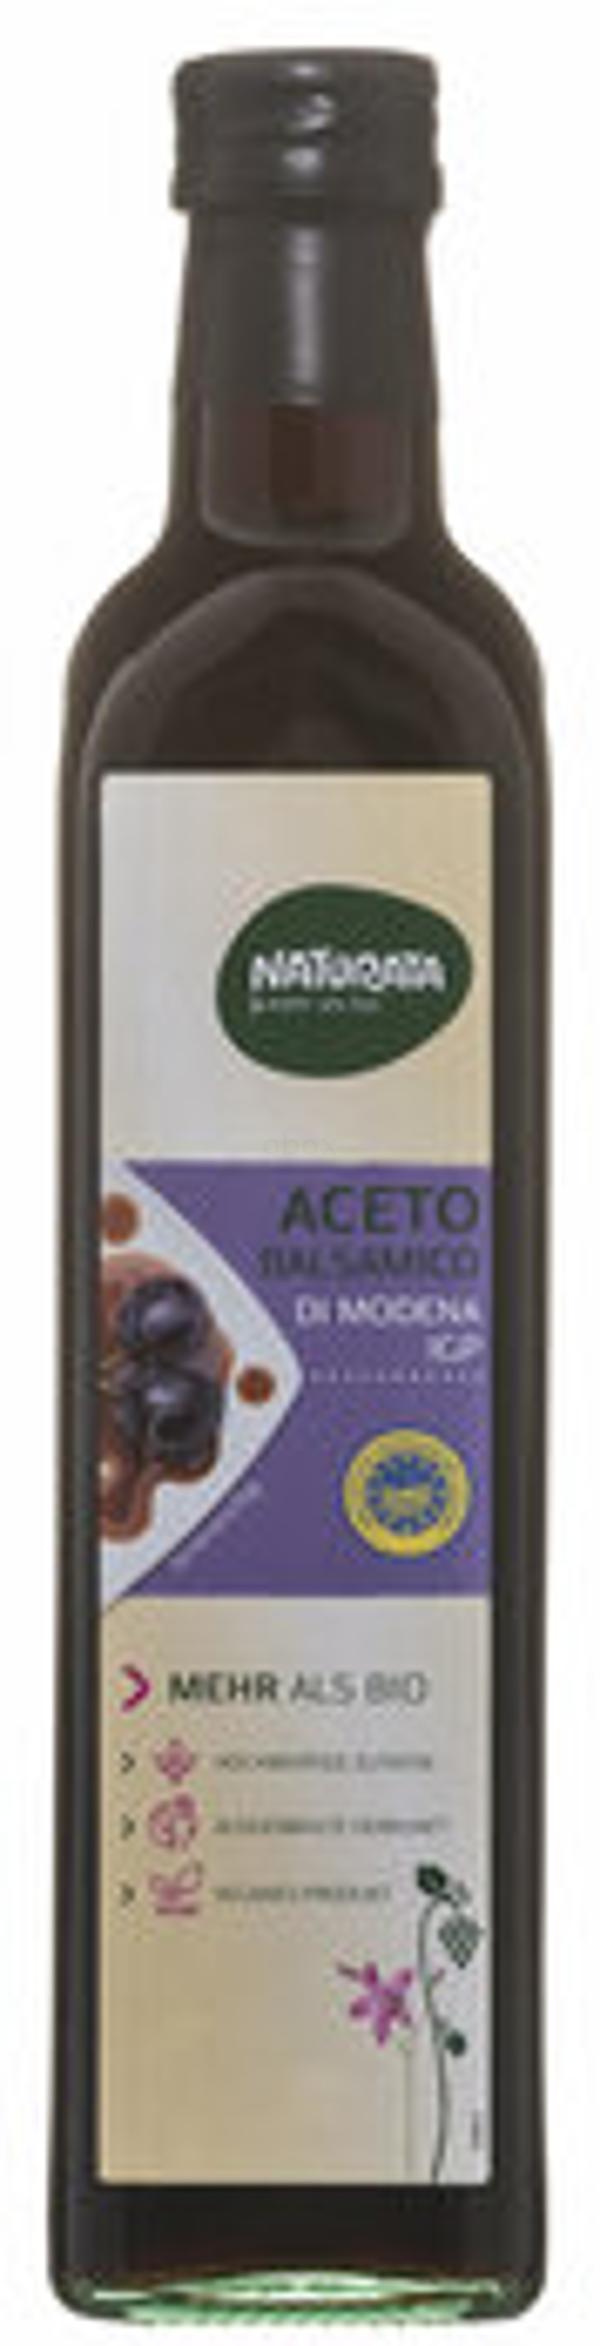 Produktfoto zu Aceto Balsamico di Modena 500 ml